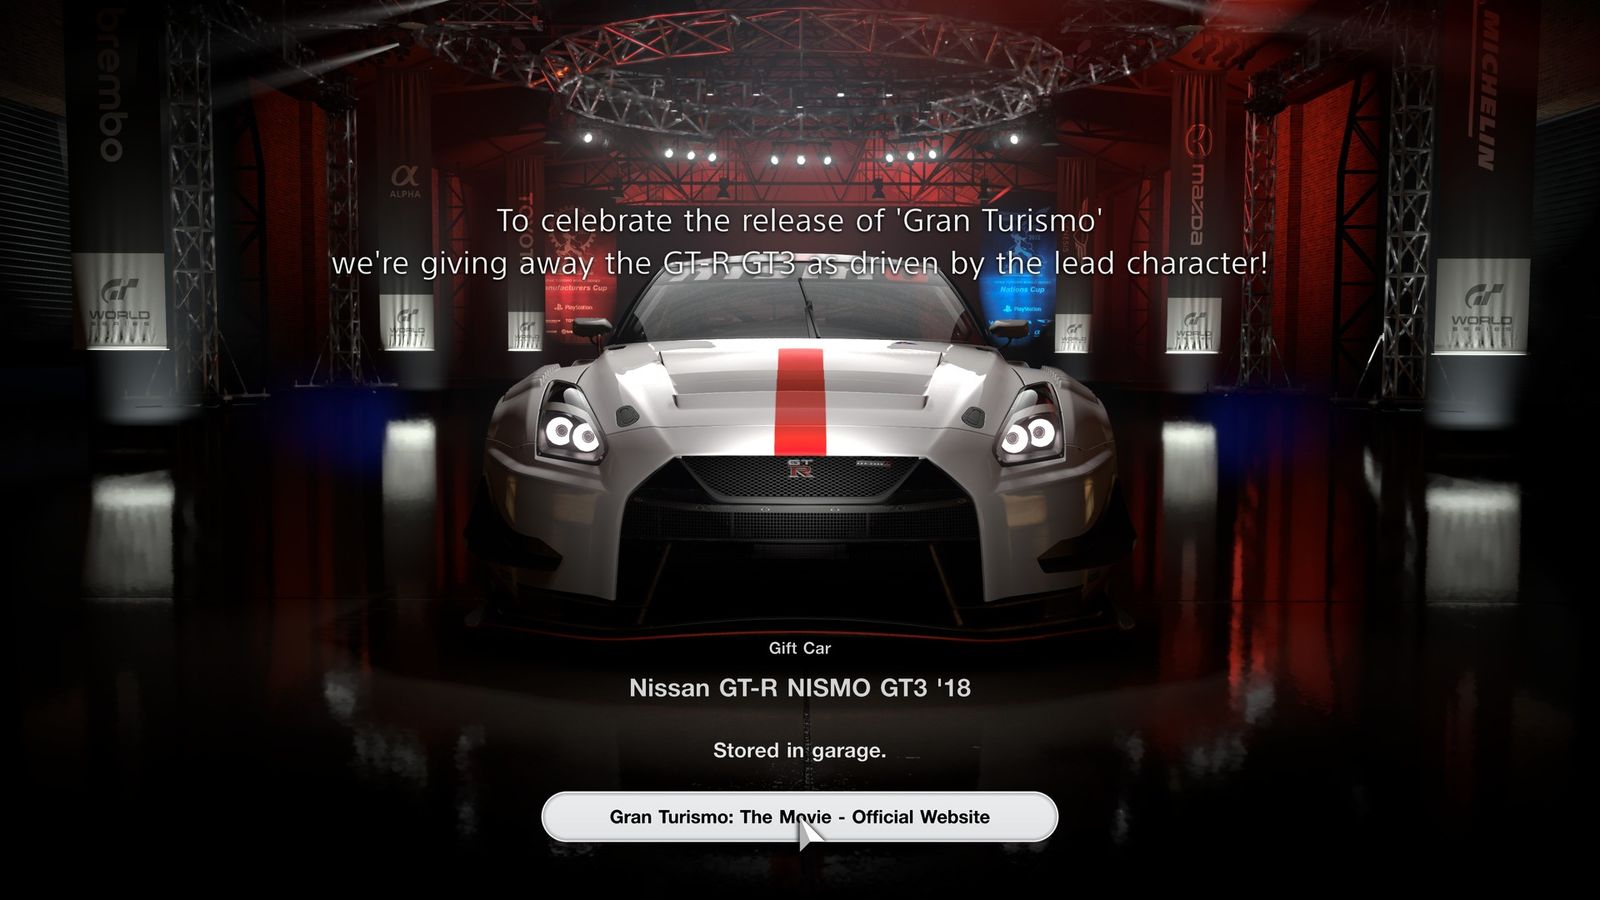 Gran Turismo 7 Nissan GT-R Nismo GT3 gift car